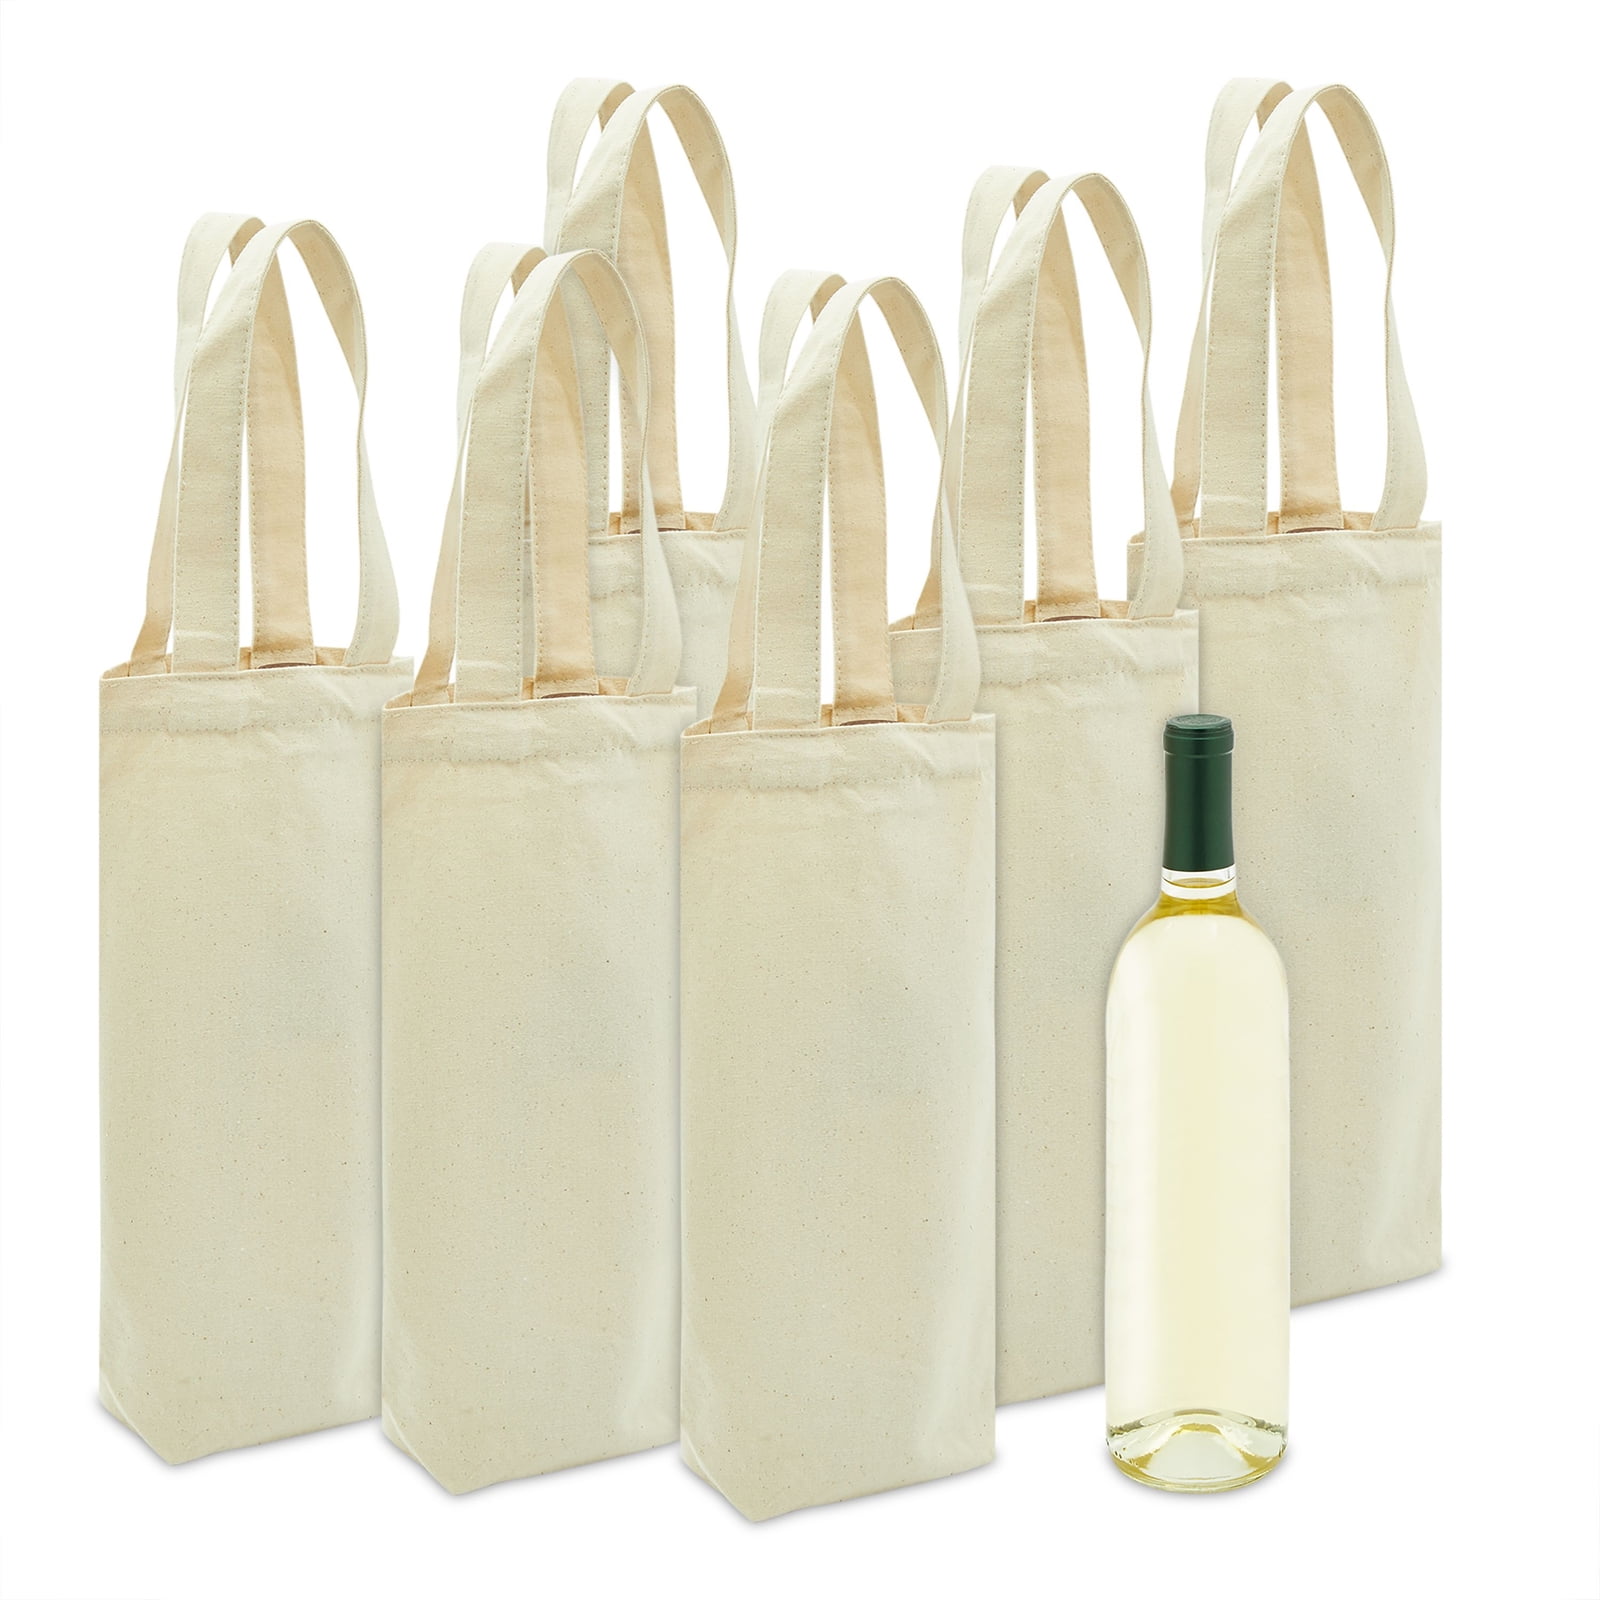 5 X Jute Hessian Rustic Gift Wine Bottle Bag 5 Bags £10.99.Christmas discount. 